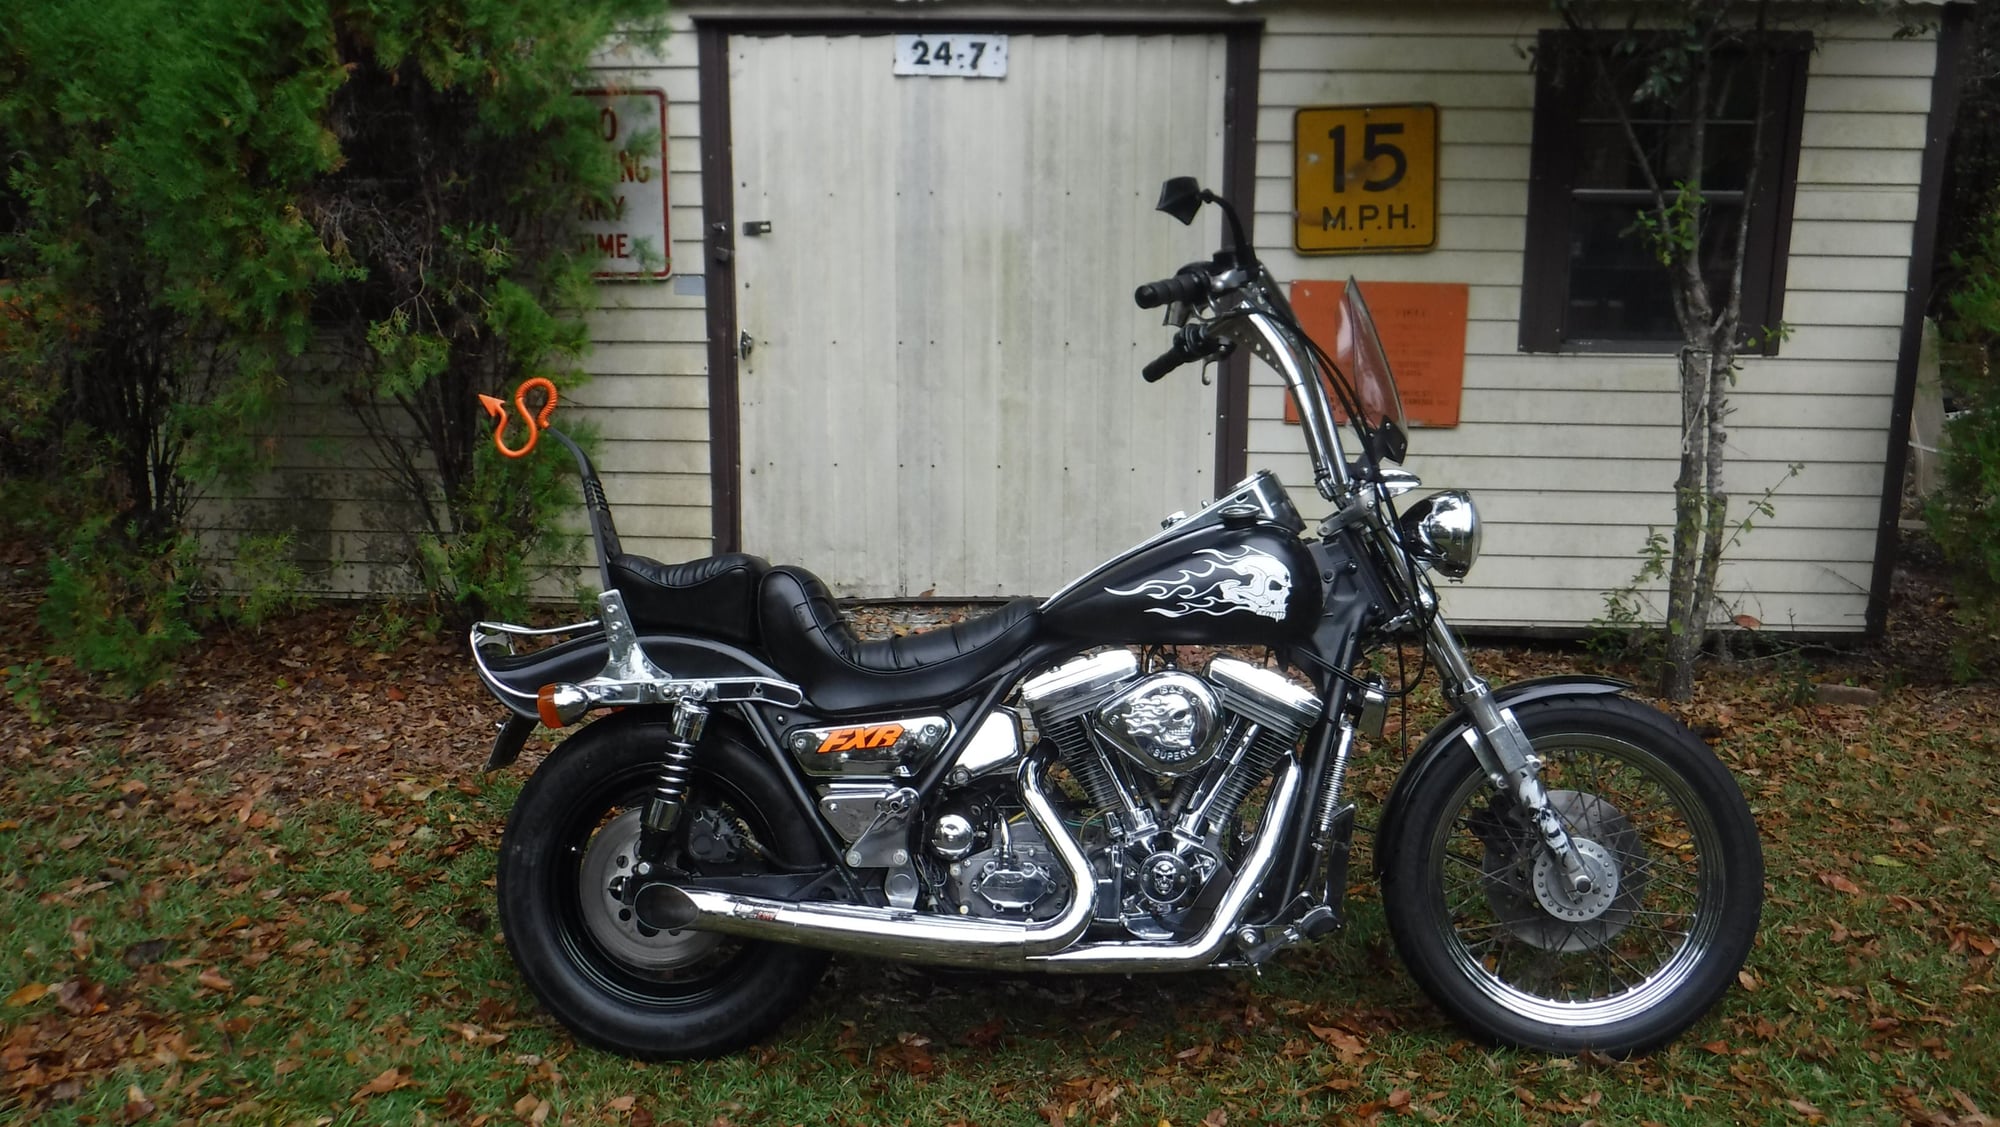 Finding a Mechanic - Harley Davidson Forums